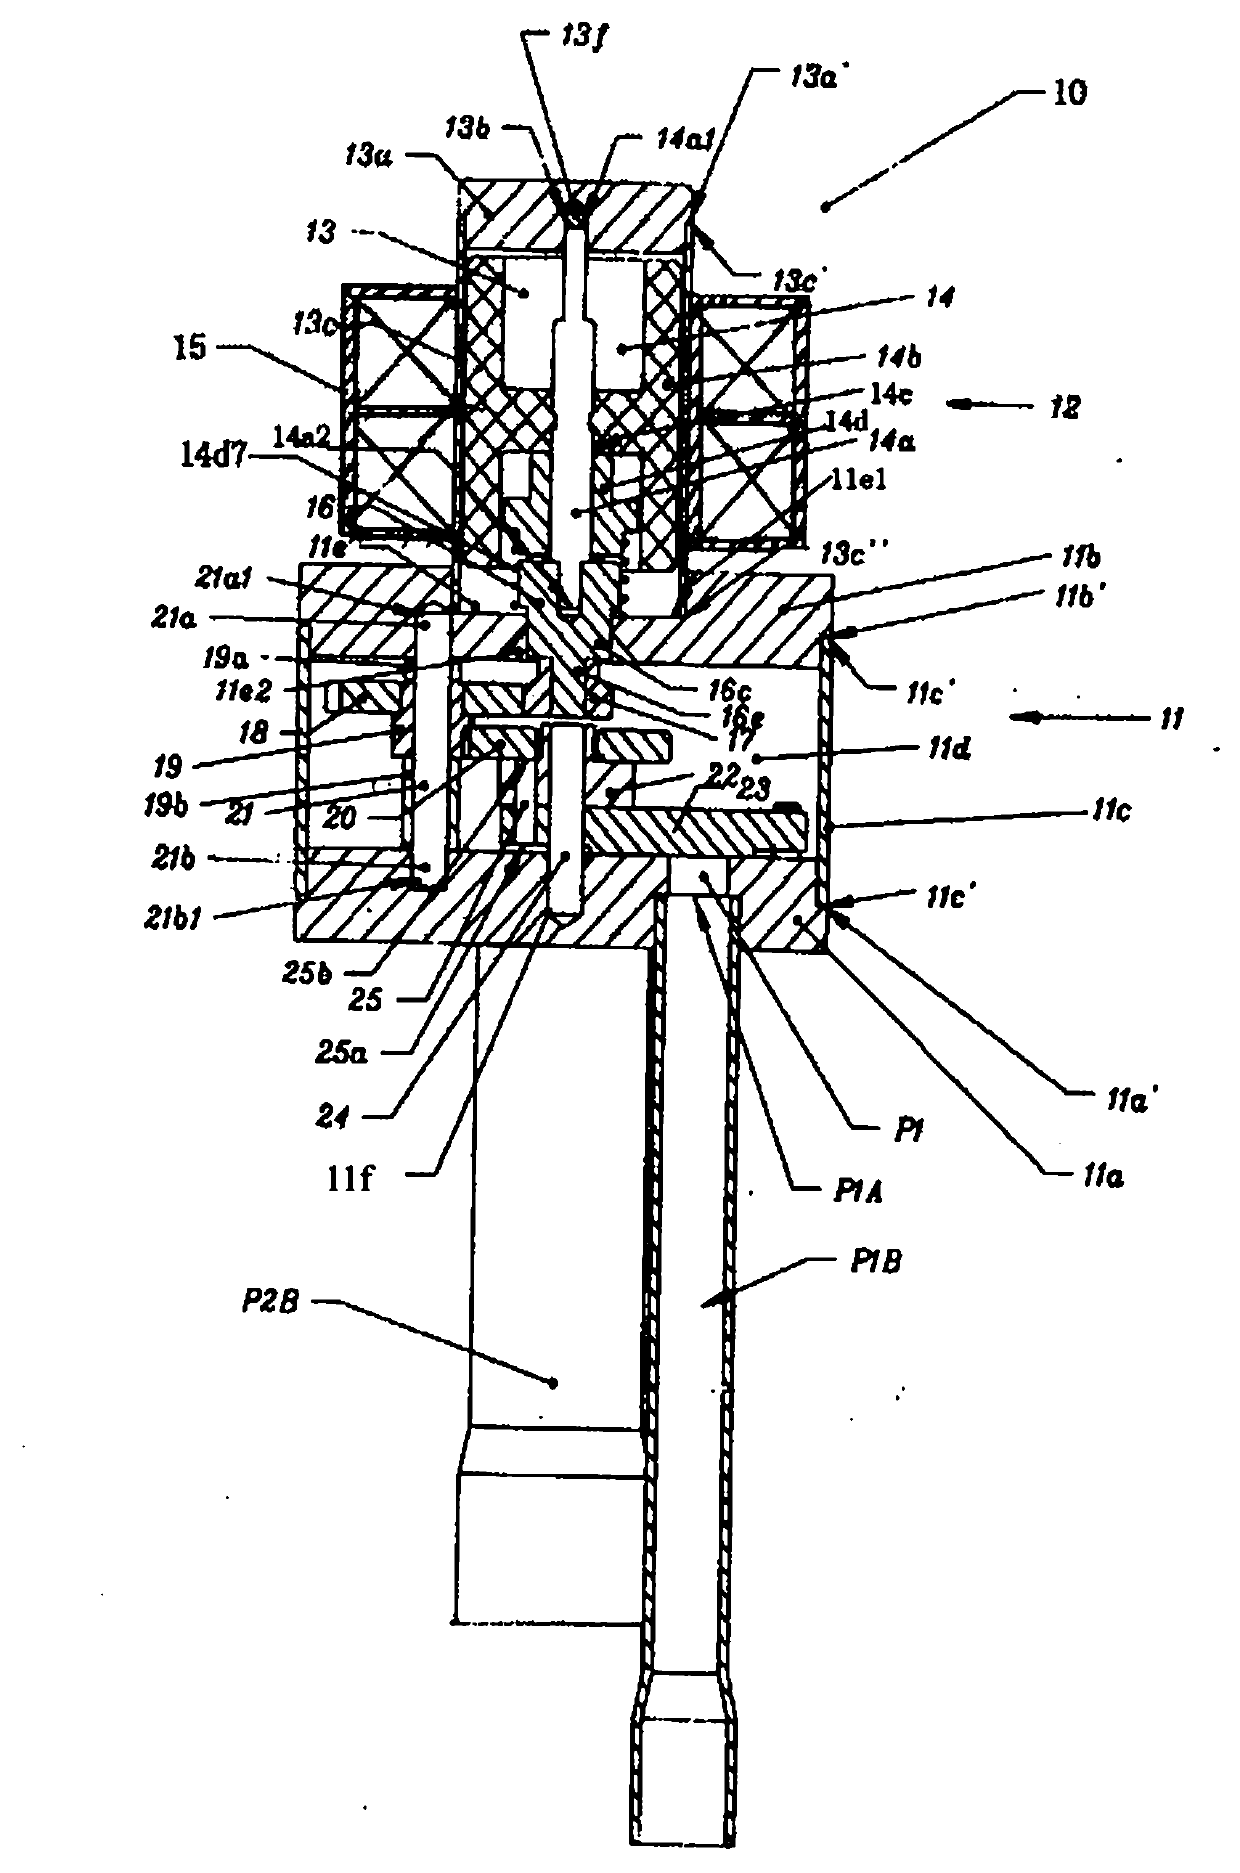 Motor-driven three-way valve